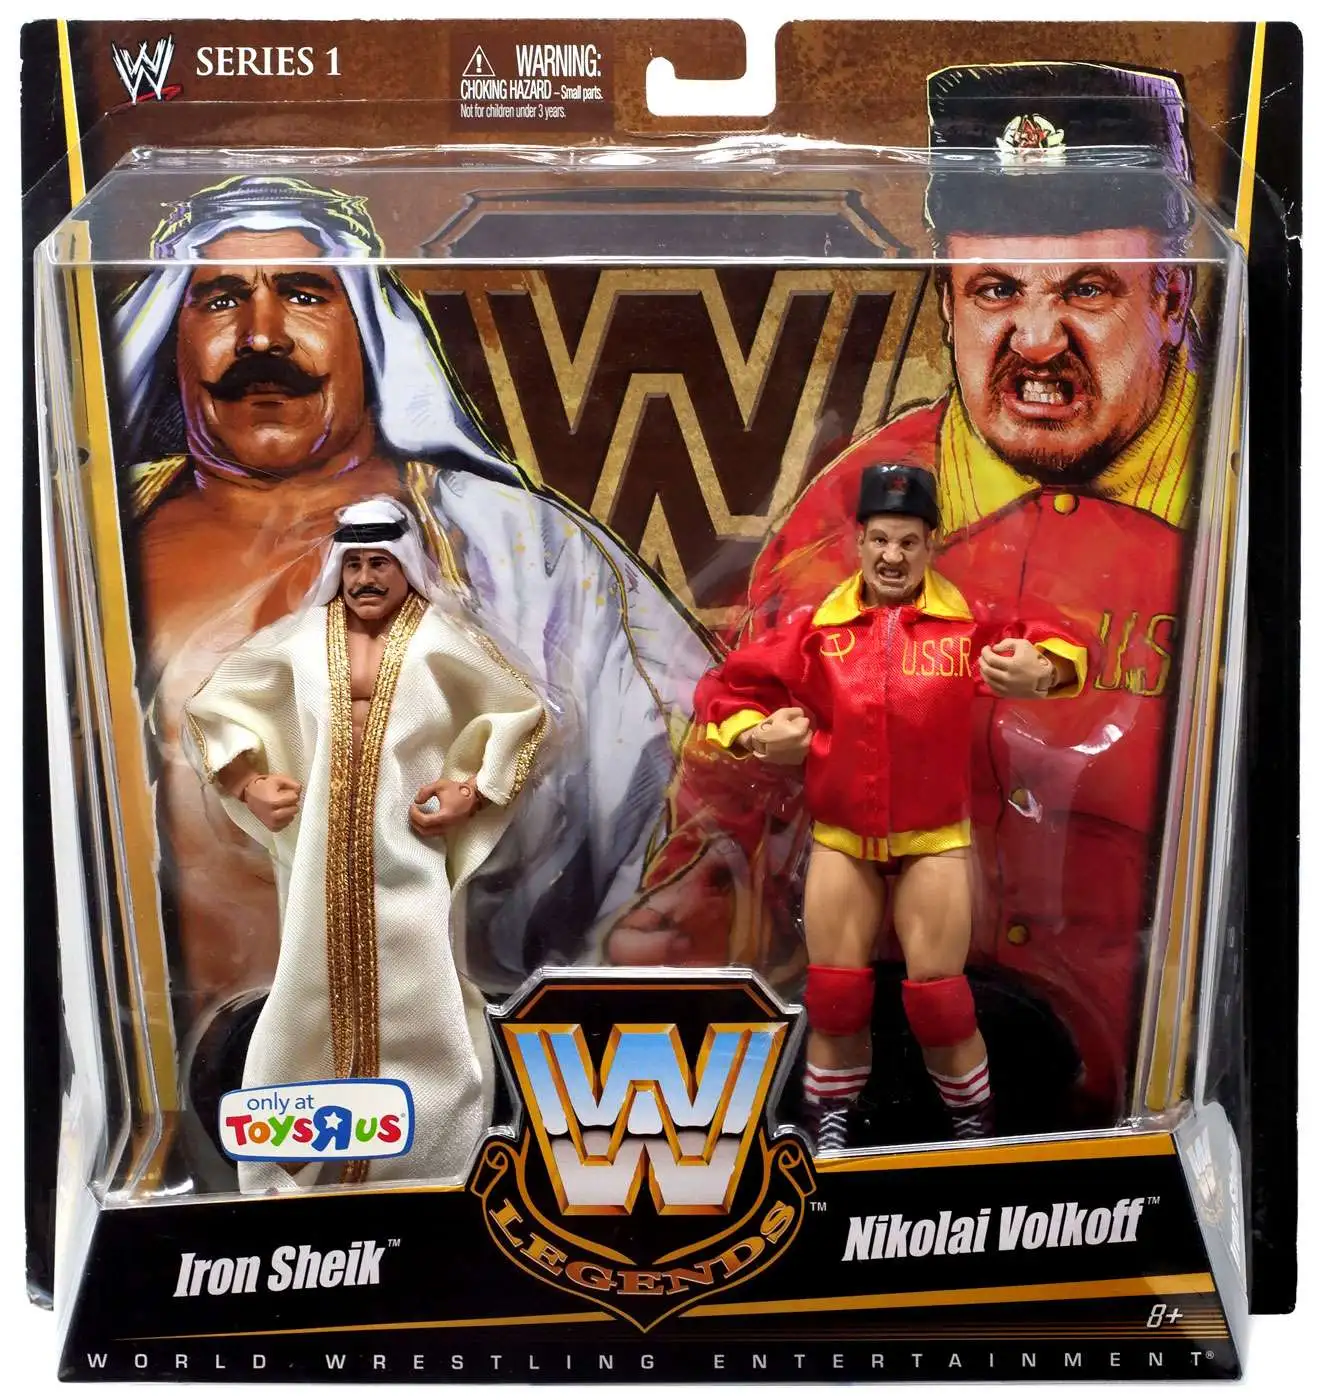 Grand Masters Of Wrestling Vol 2 DVD Nikolai Volkoff Iron Sheik Blassie